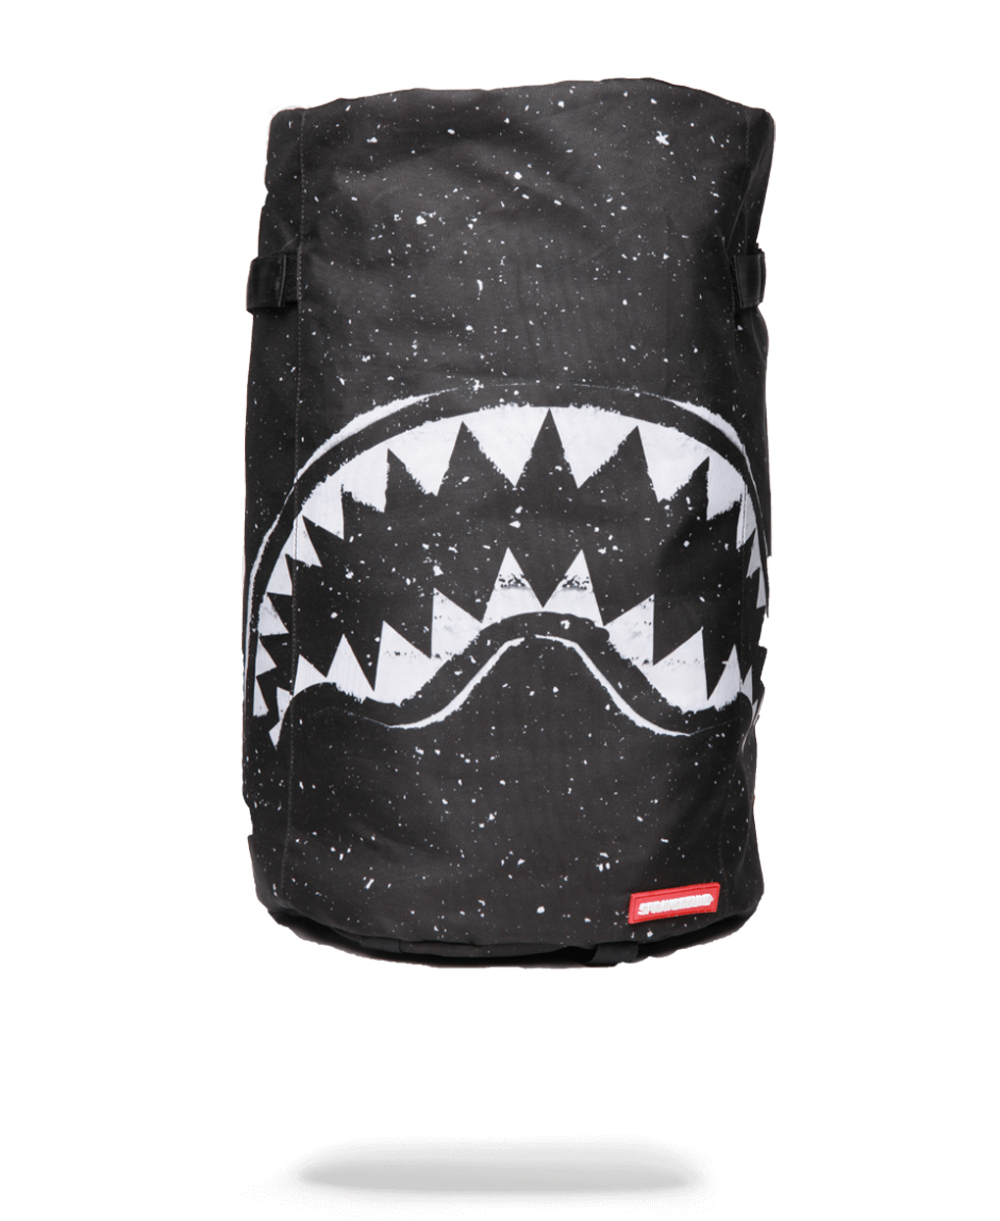 Sprayground Party Shark Duffle Bag